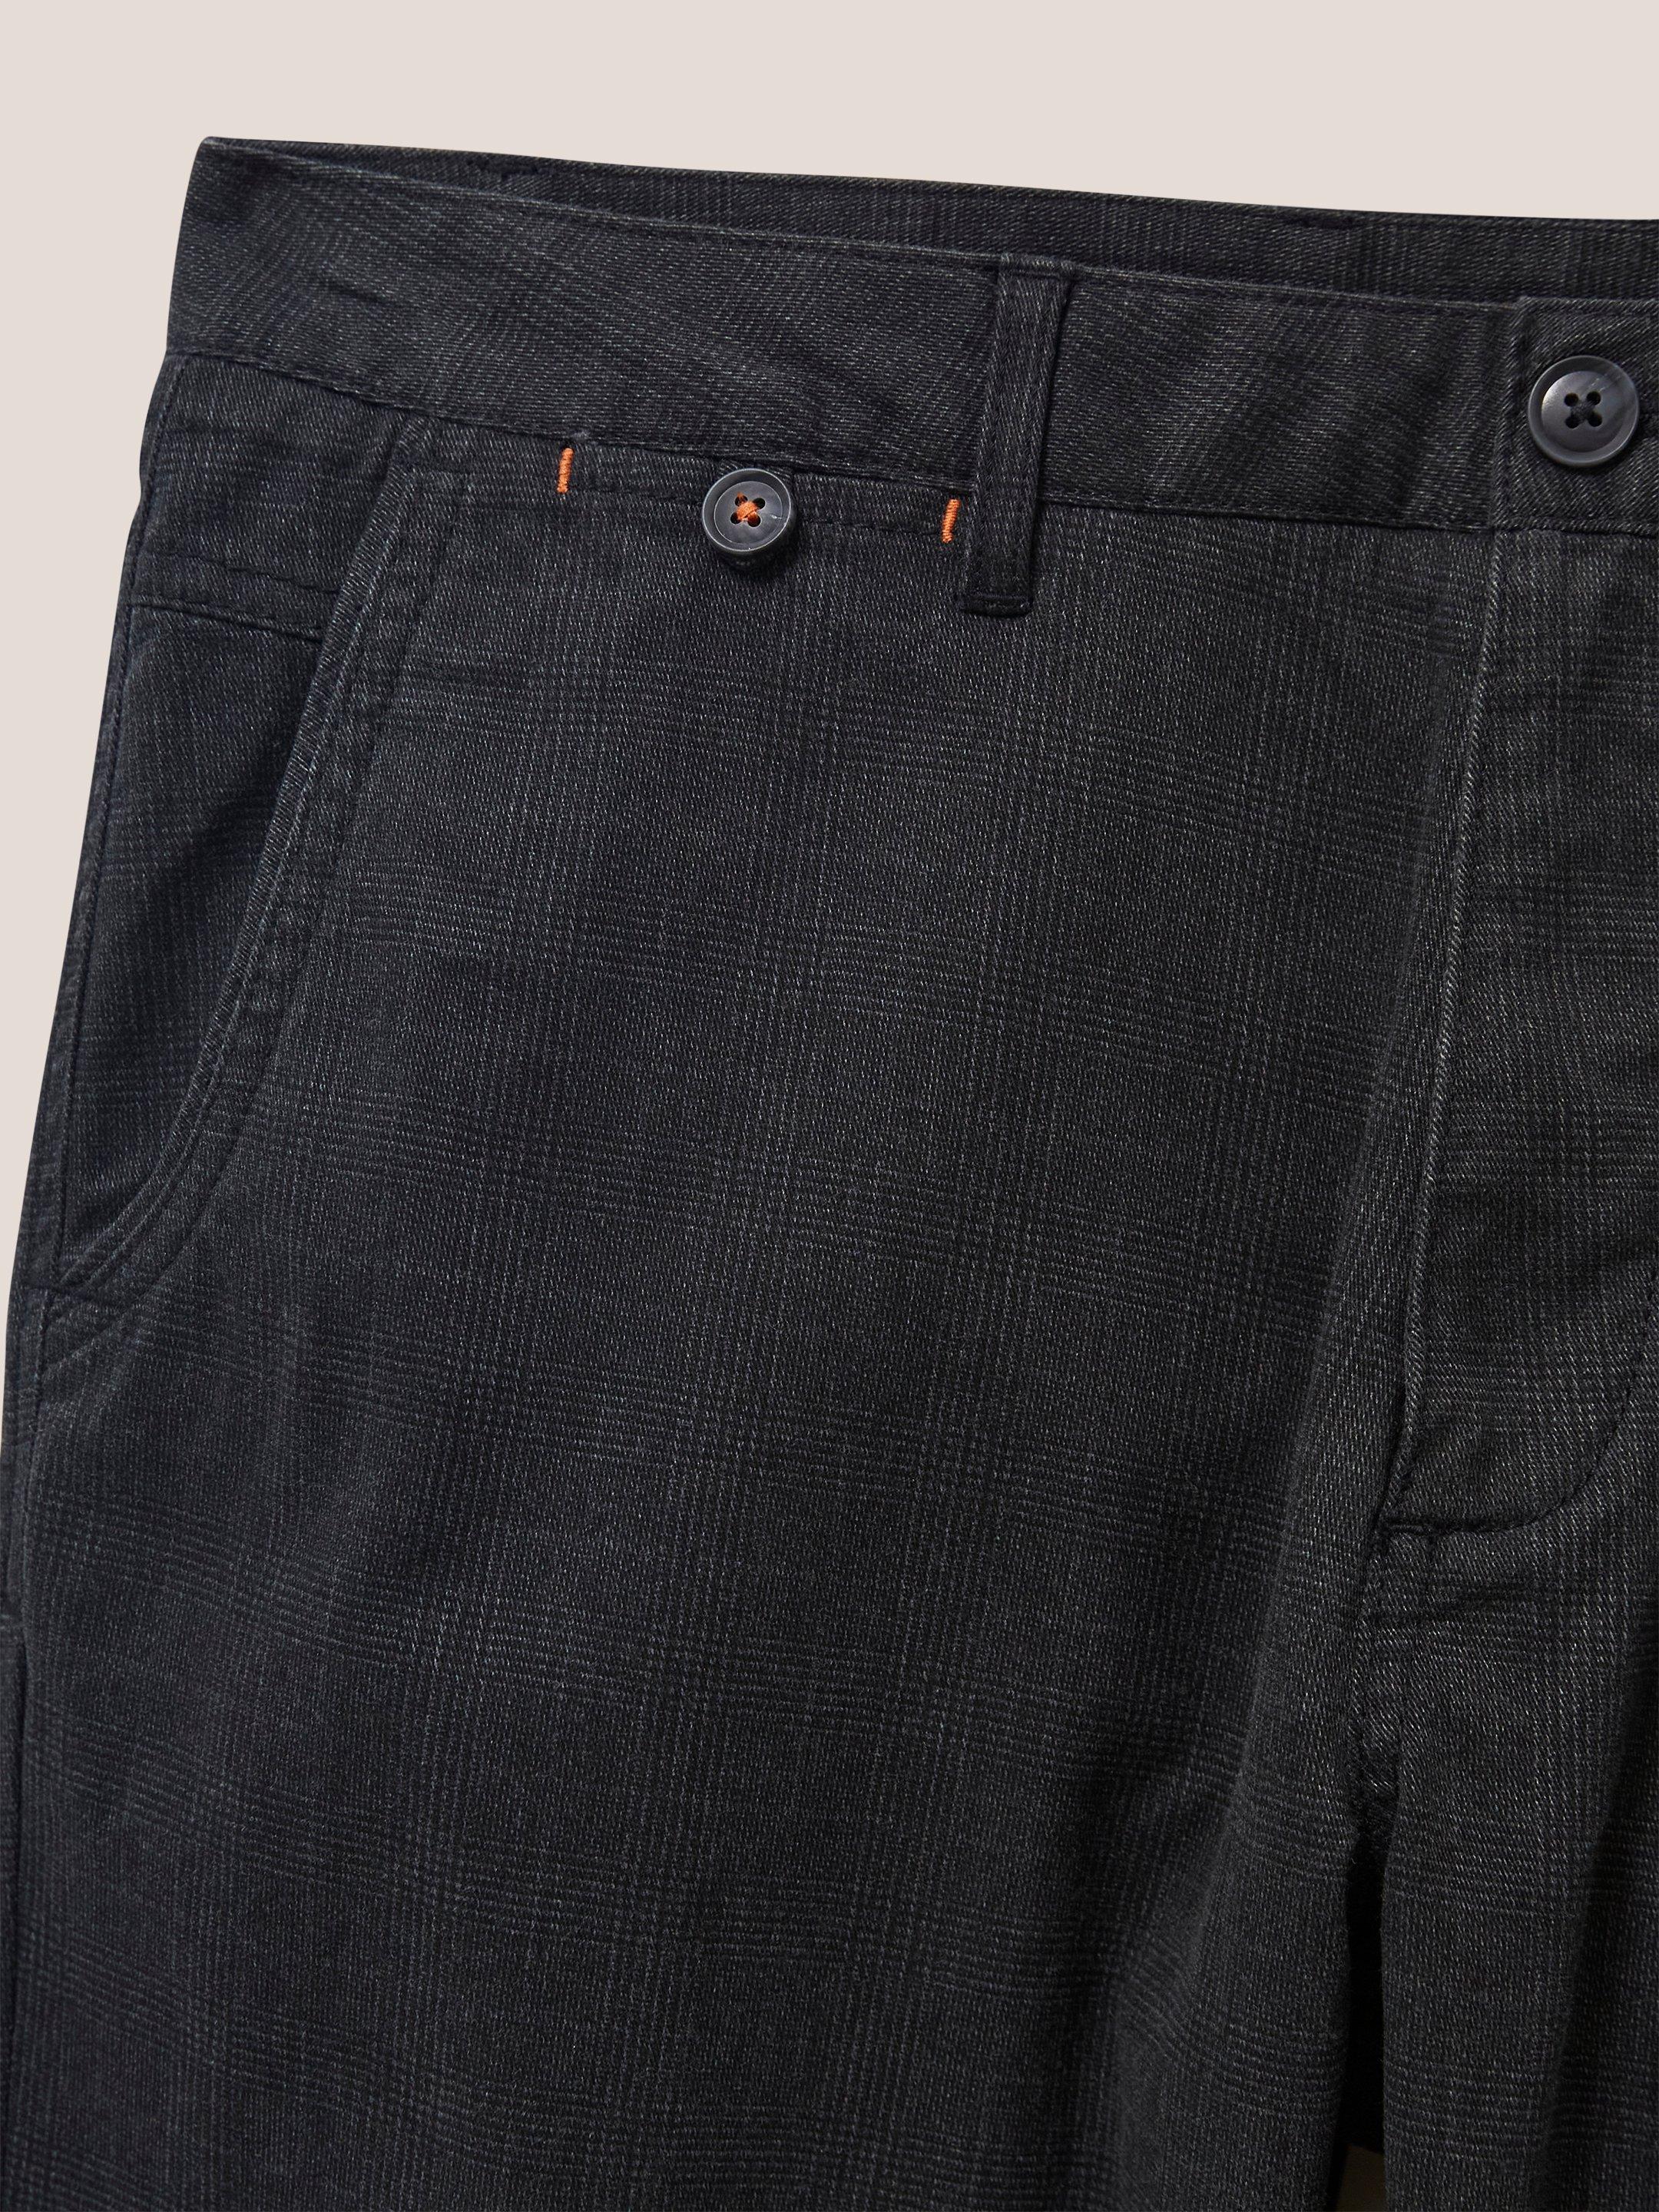 Smart Sutton Trouser in CHARC GREY - FLAT DETAIL